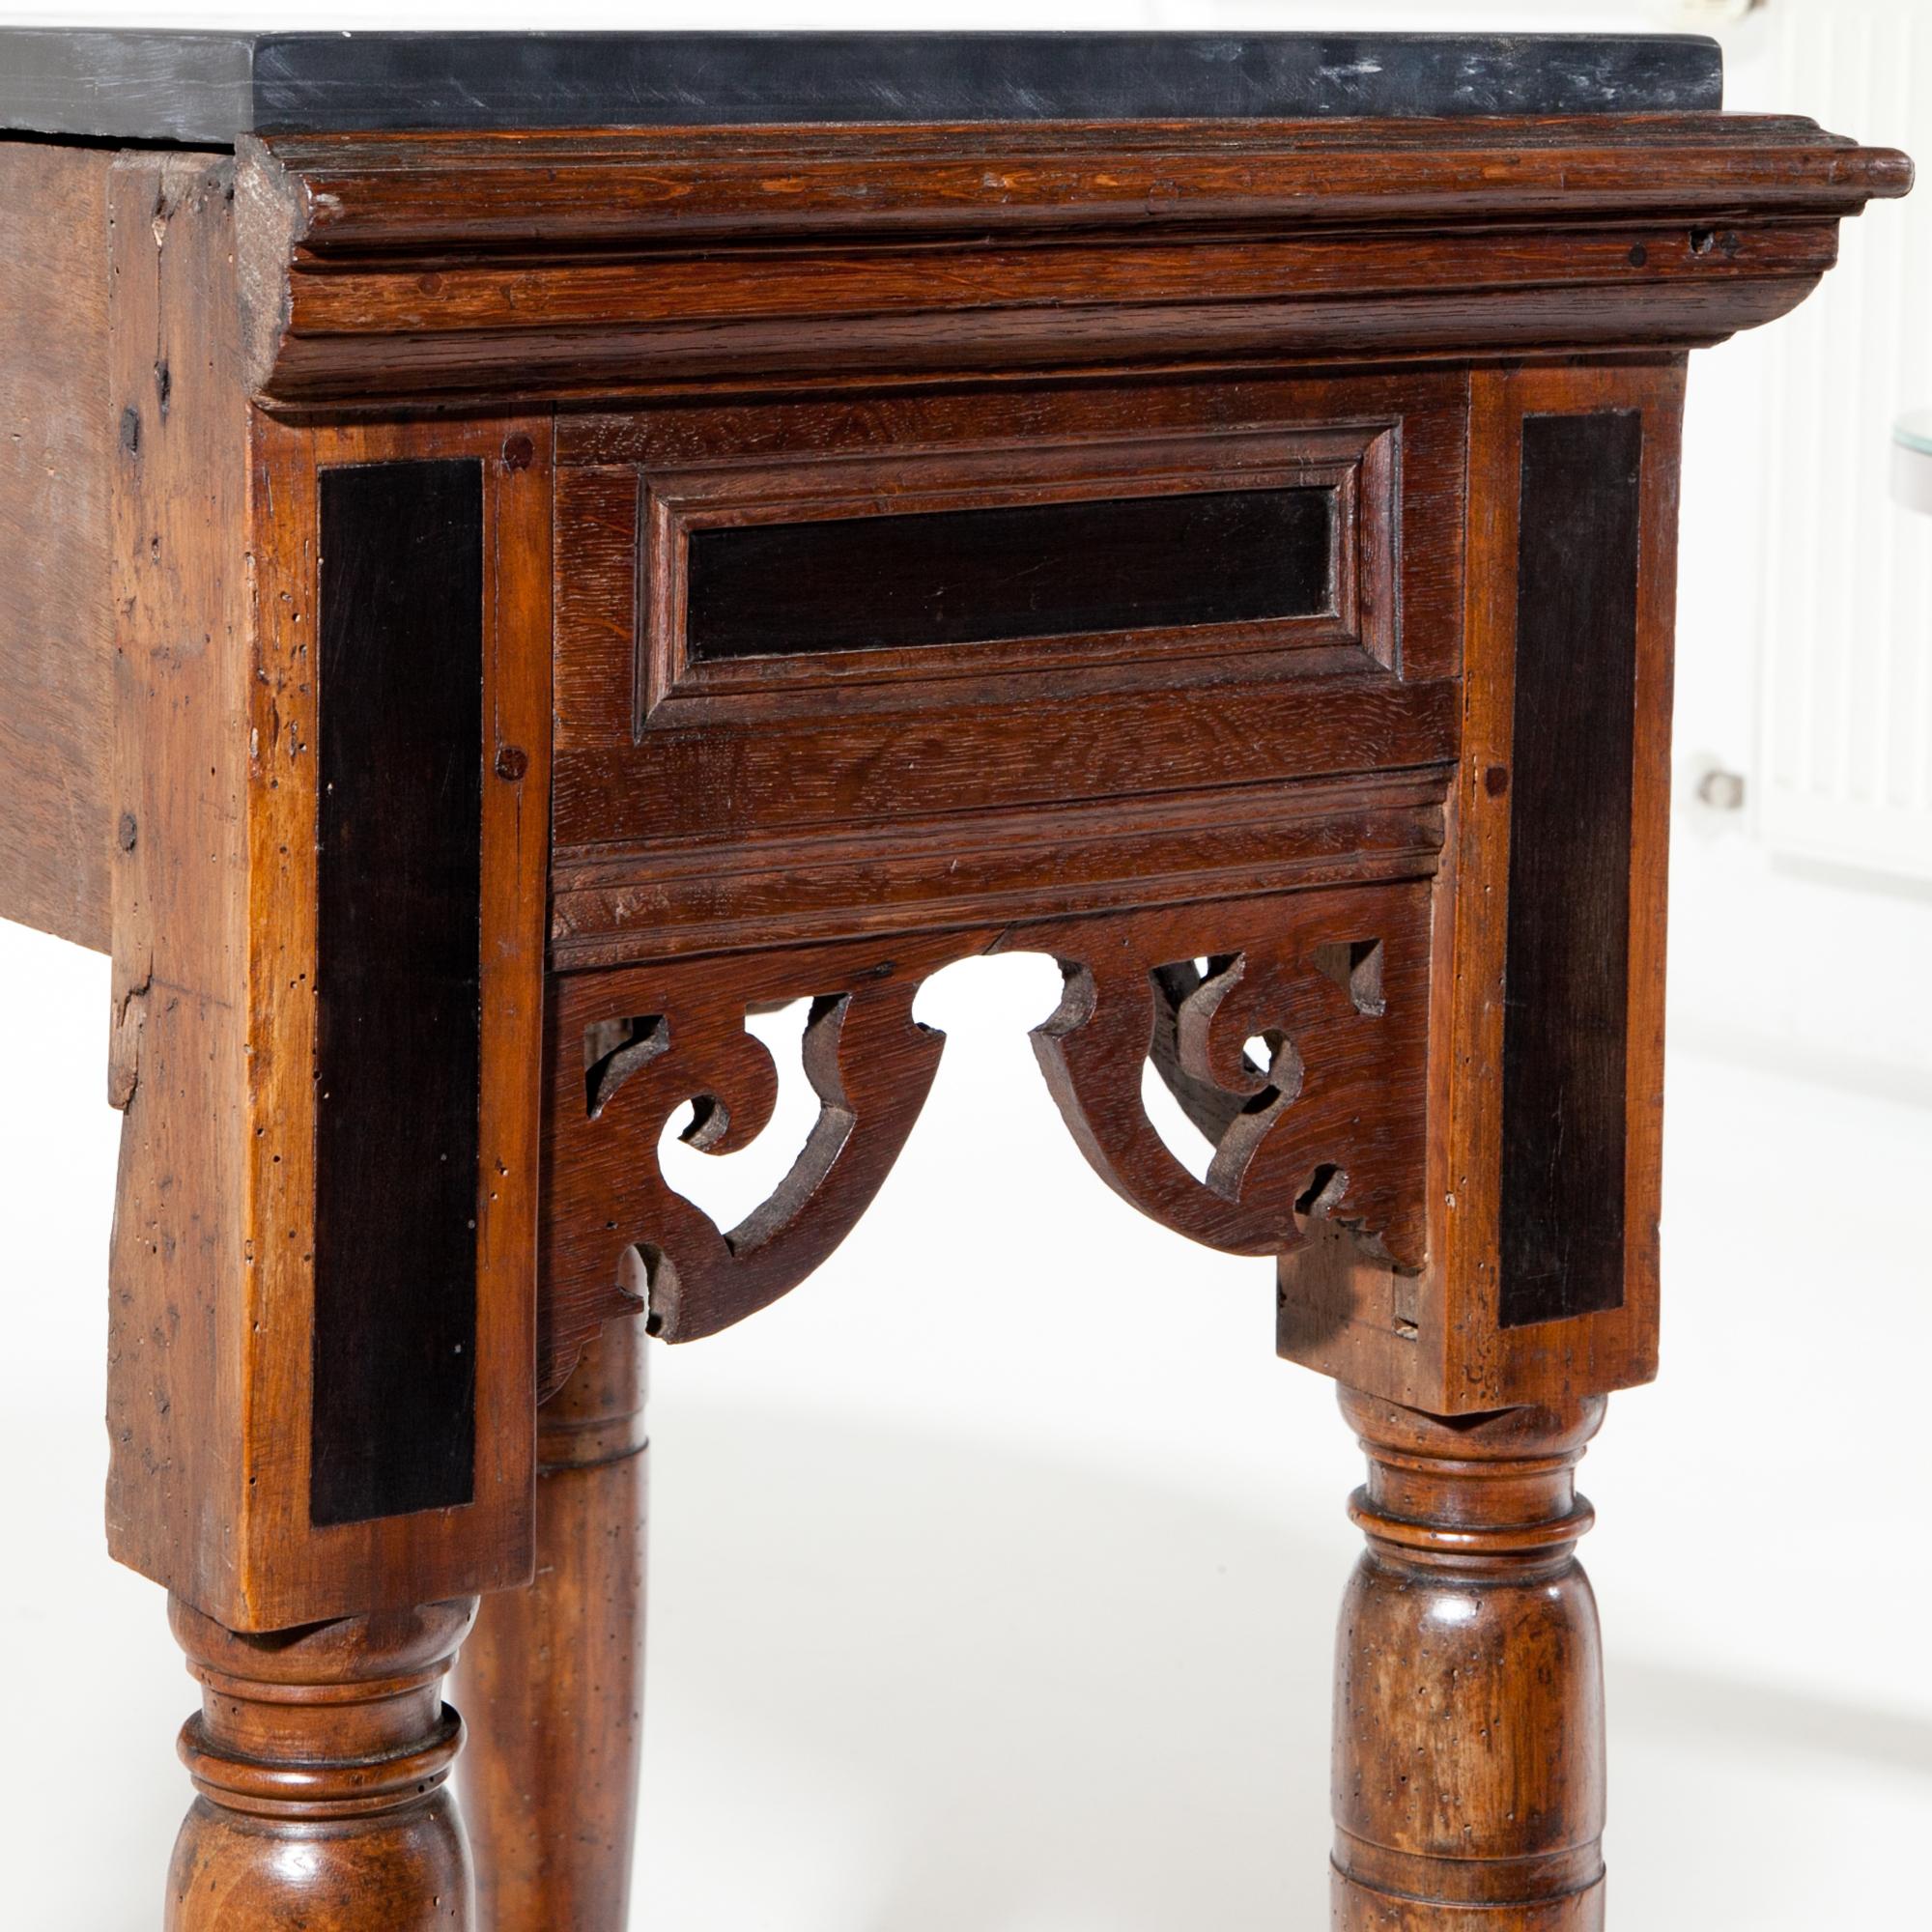 Dutch Side Table, 18th-19th Century (Marmor)